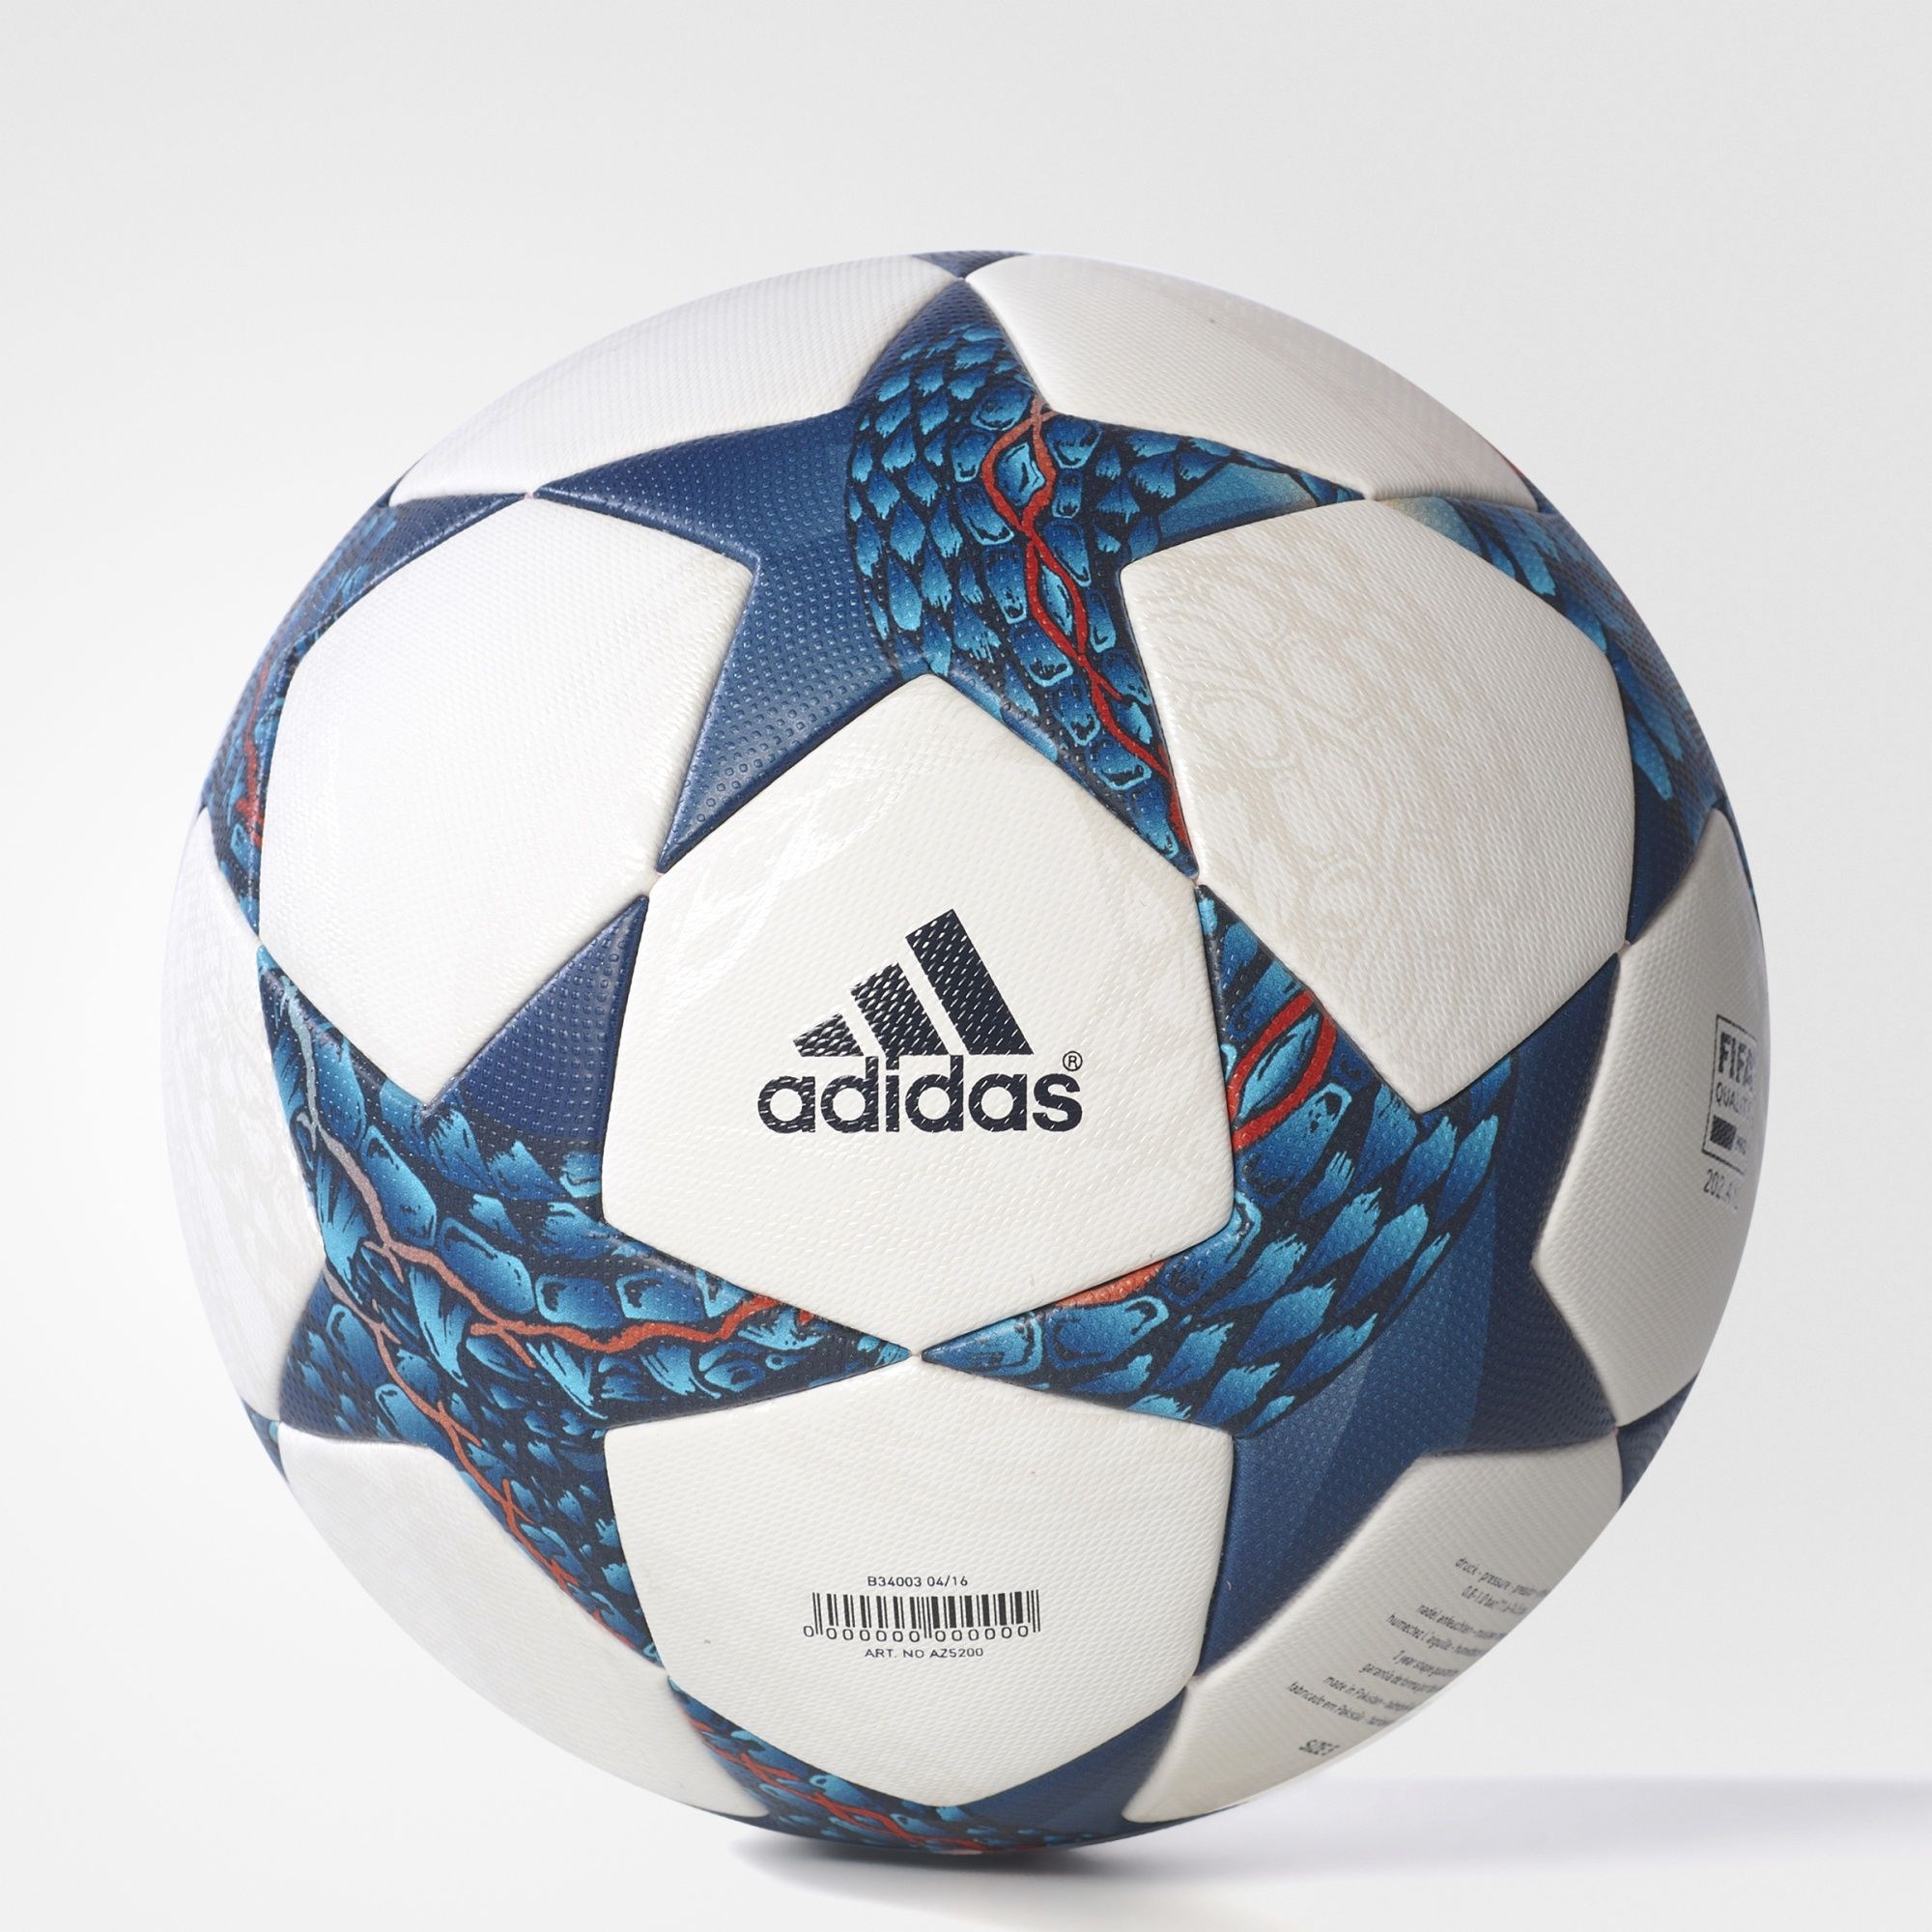 adidas Finale Cardiff OMB Futbol Topu Ürün kodu: AZ5200 | Etichet Sport